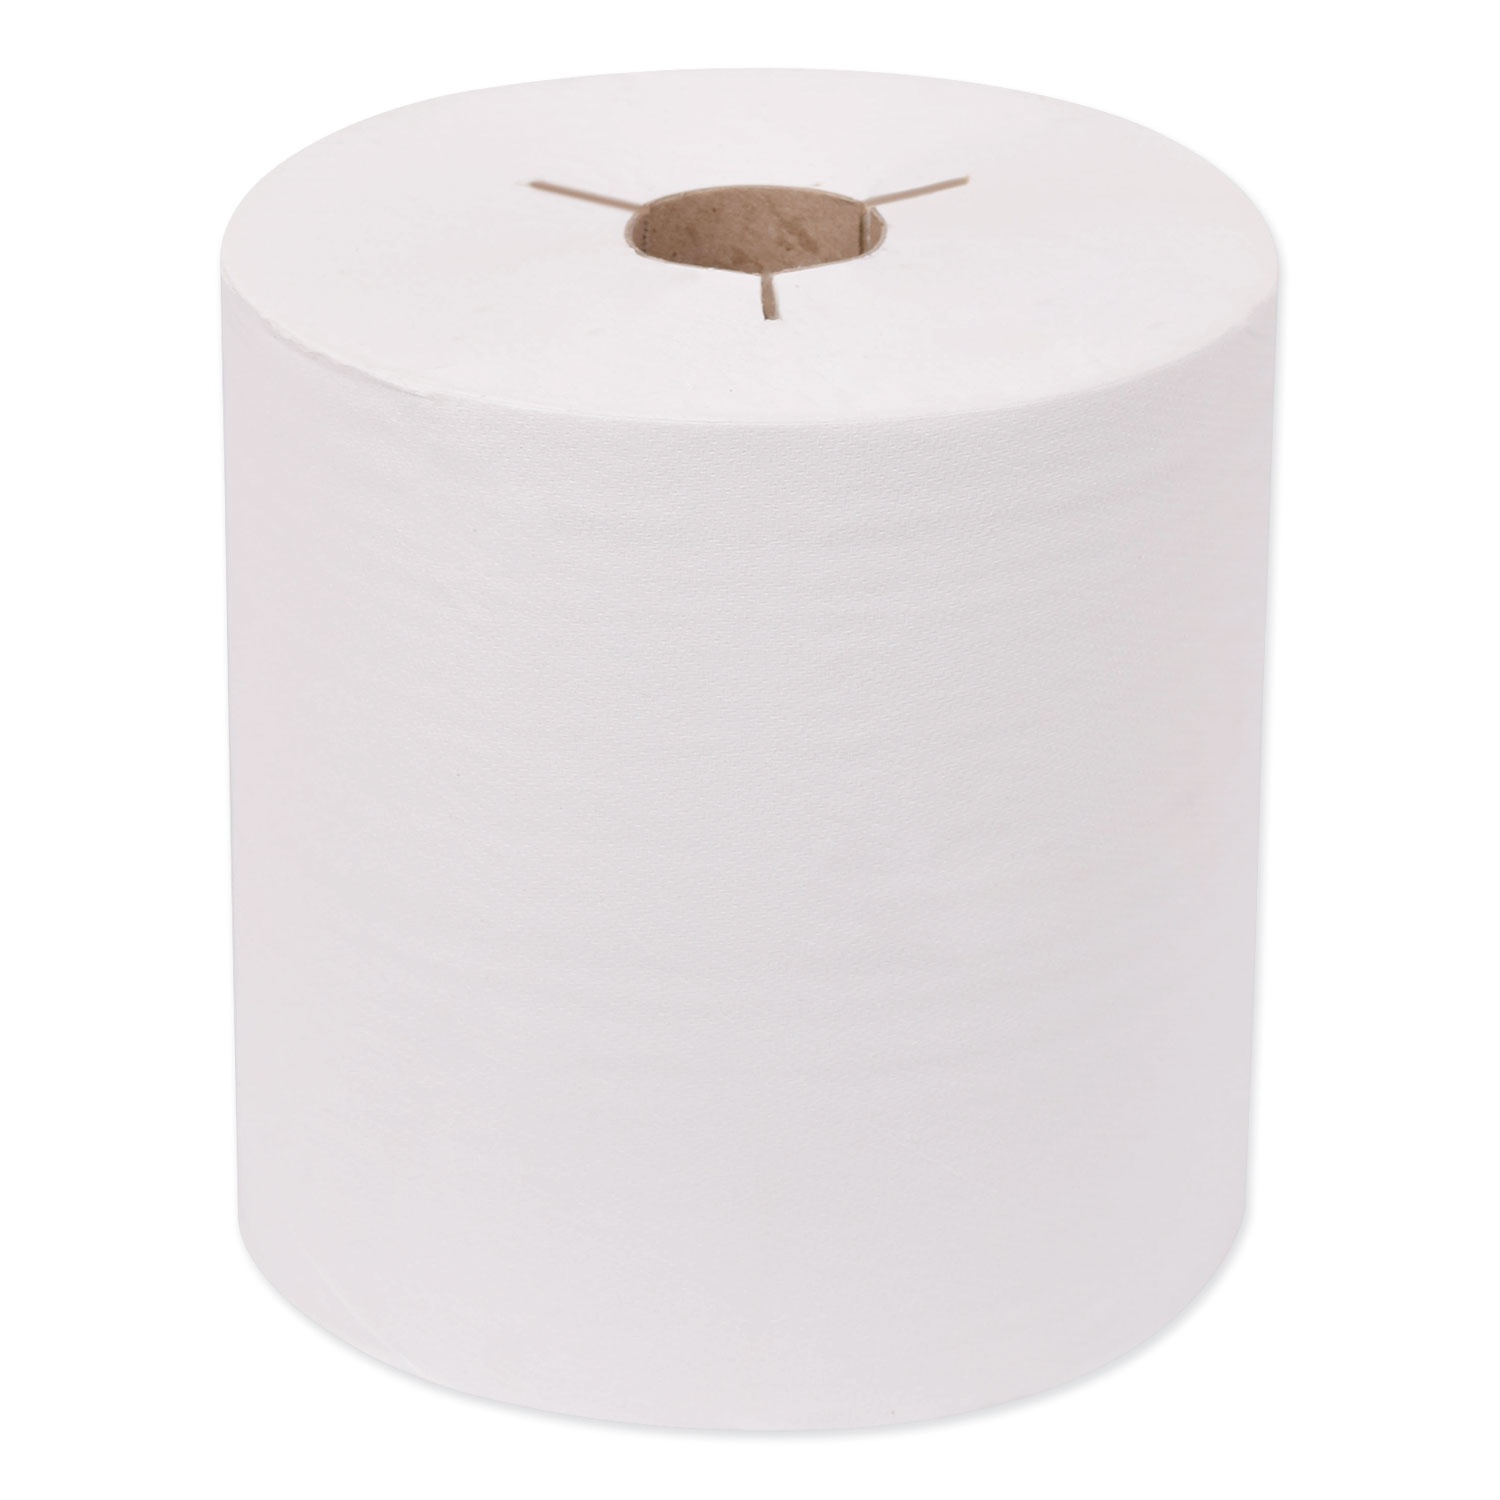  Tork 8031600 Universal Hand Towel Roll, Notched, 7.5 x 630 ft, White, 6 Rolls/Carton (TRK8031600) 